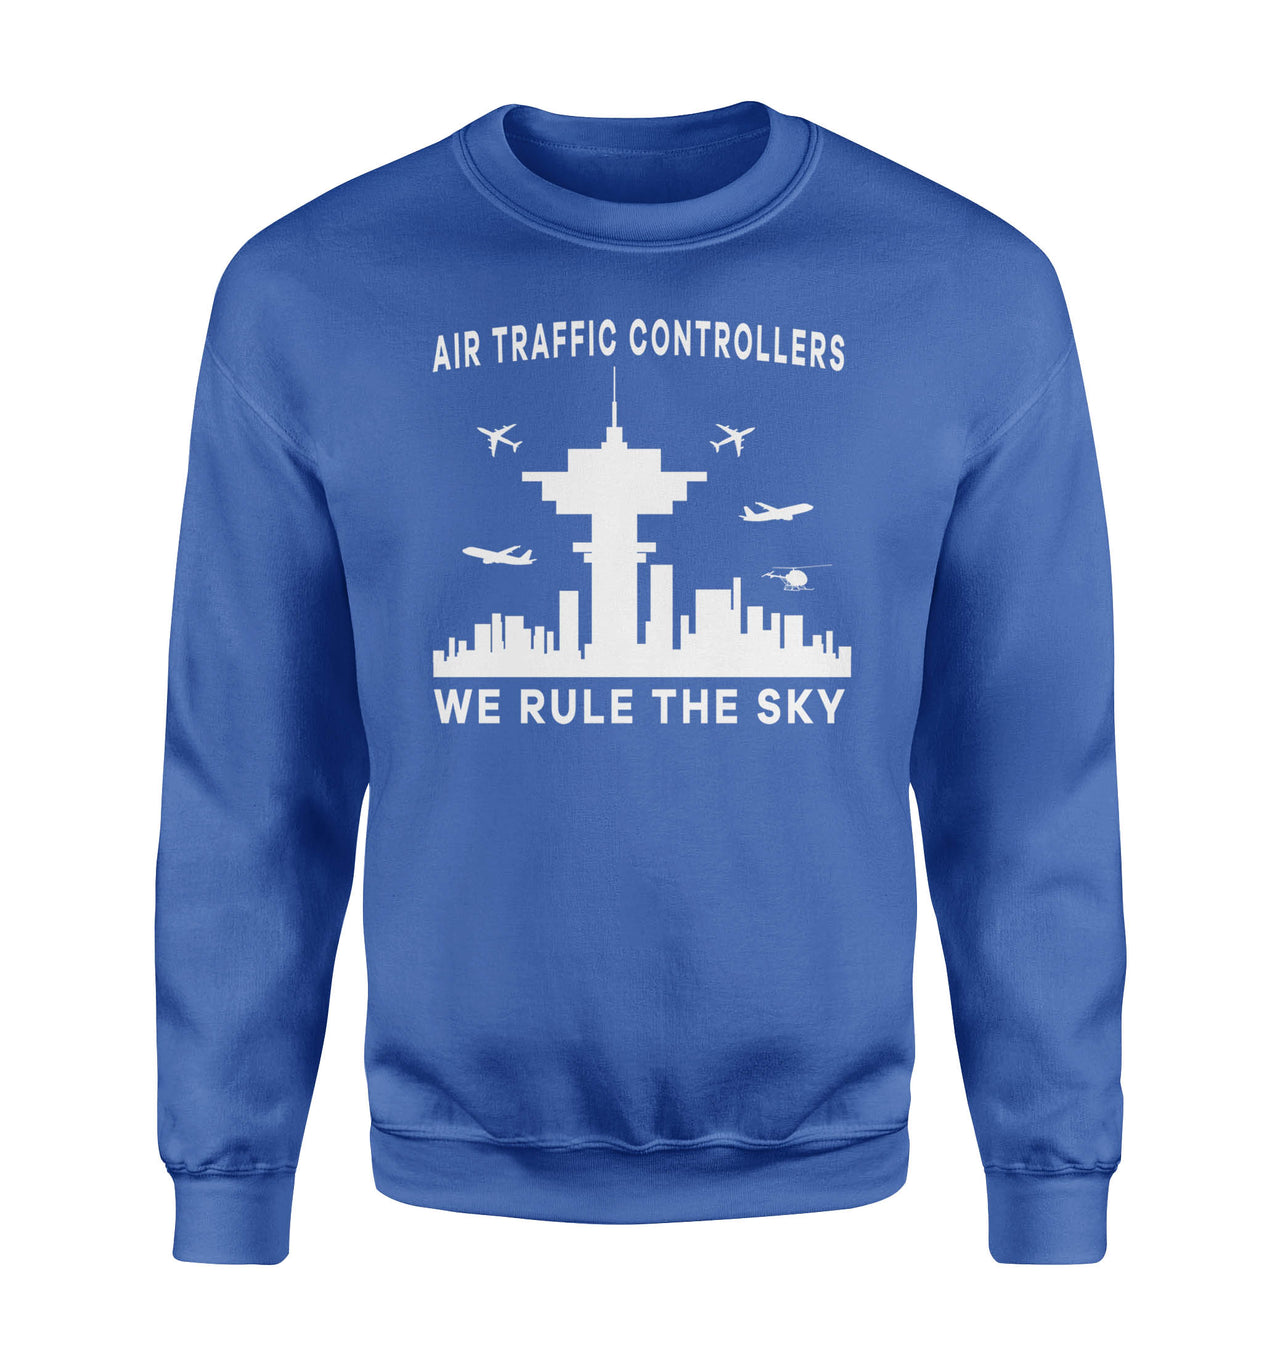 Air Traffic Controllers - We Rule The Sky Designed Sweatshirts